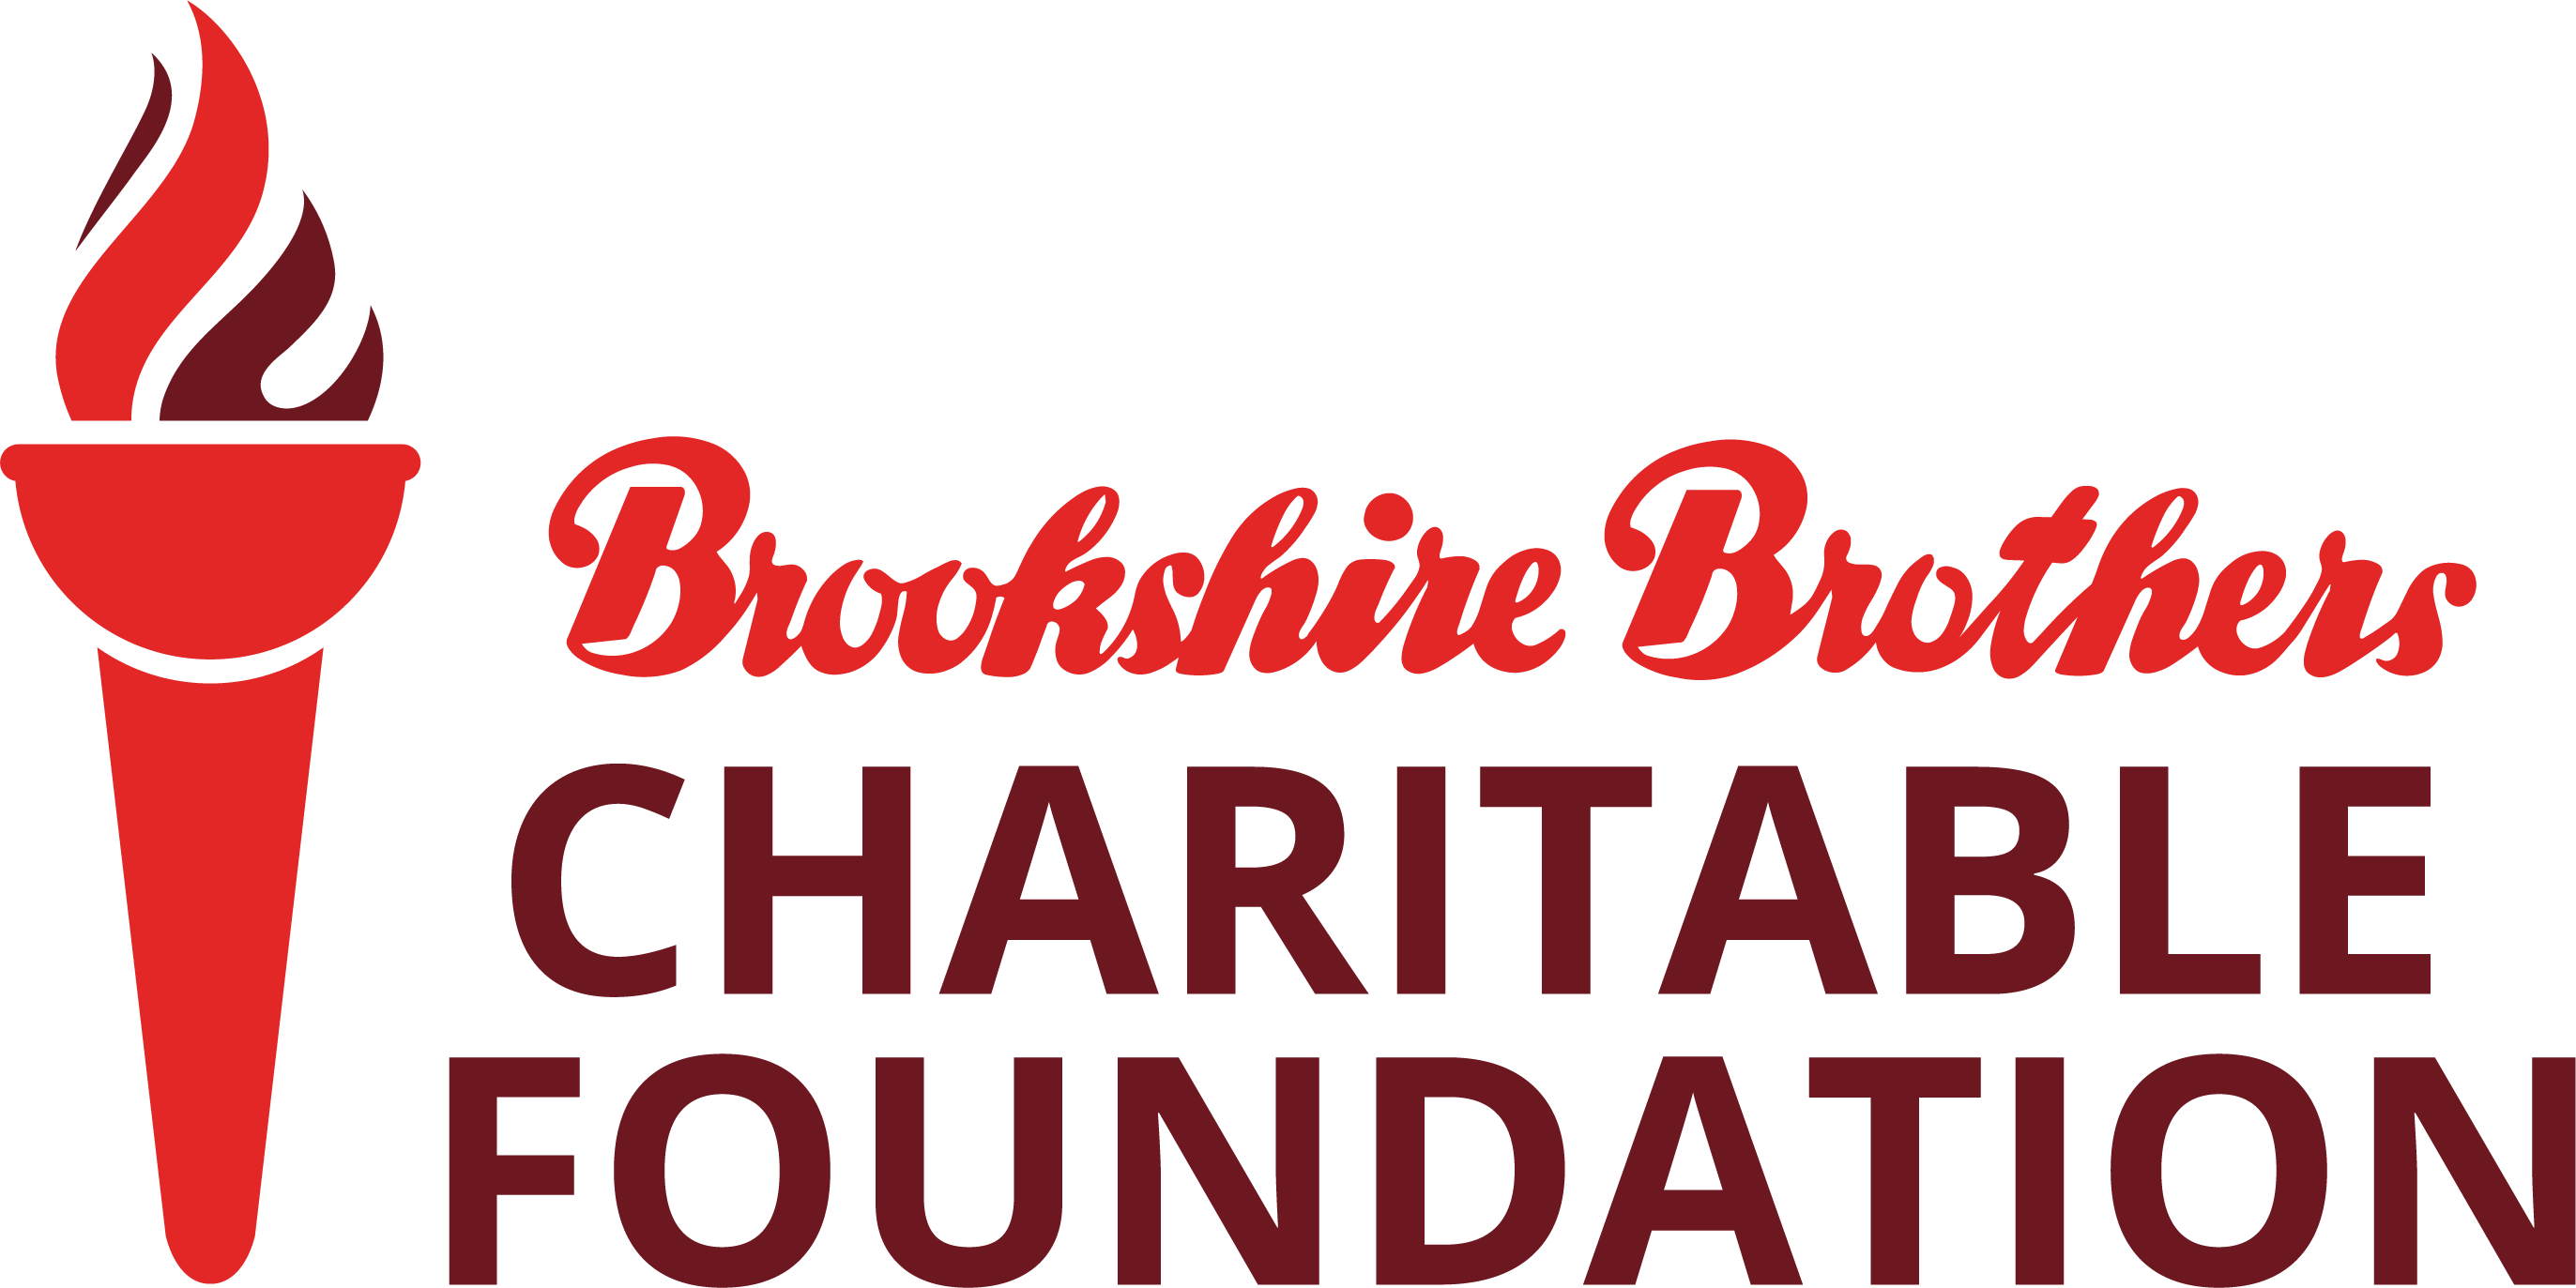 Brookshire Brothers Charitable Foundation